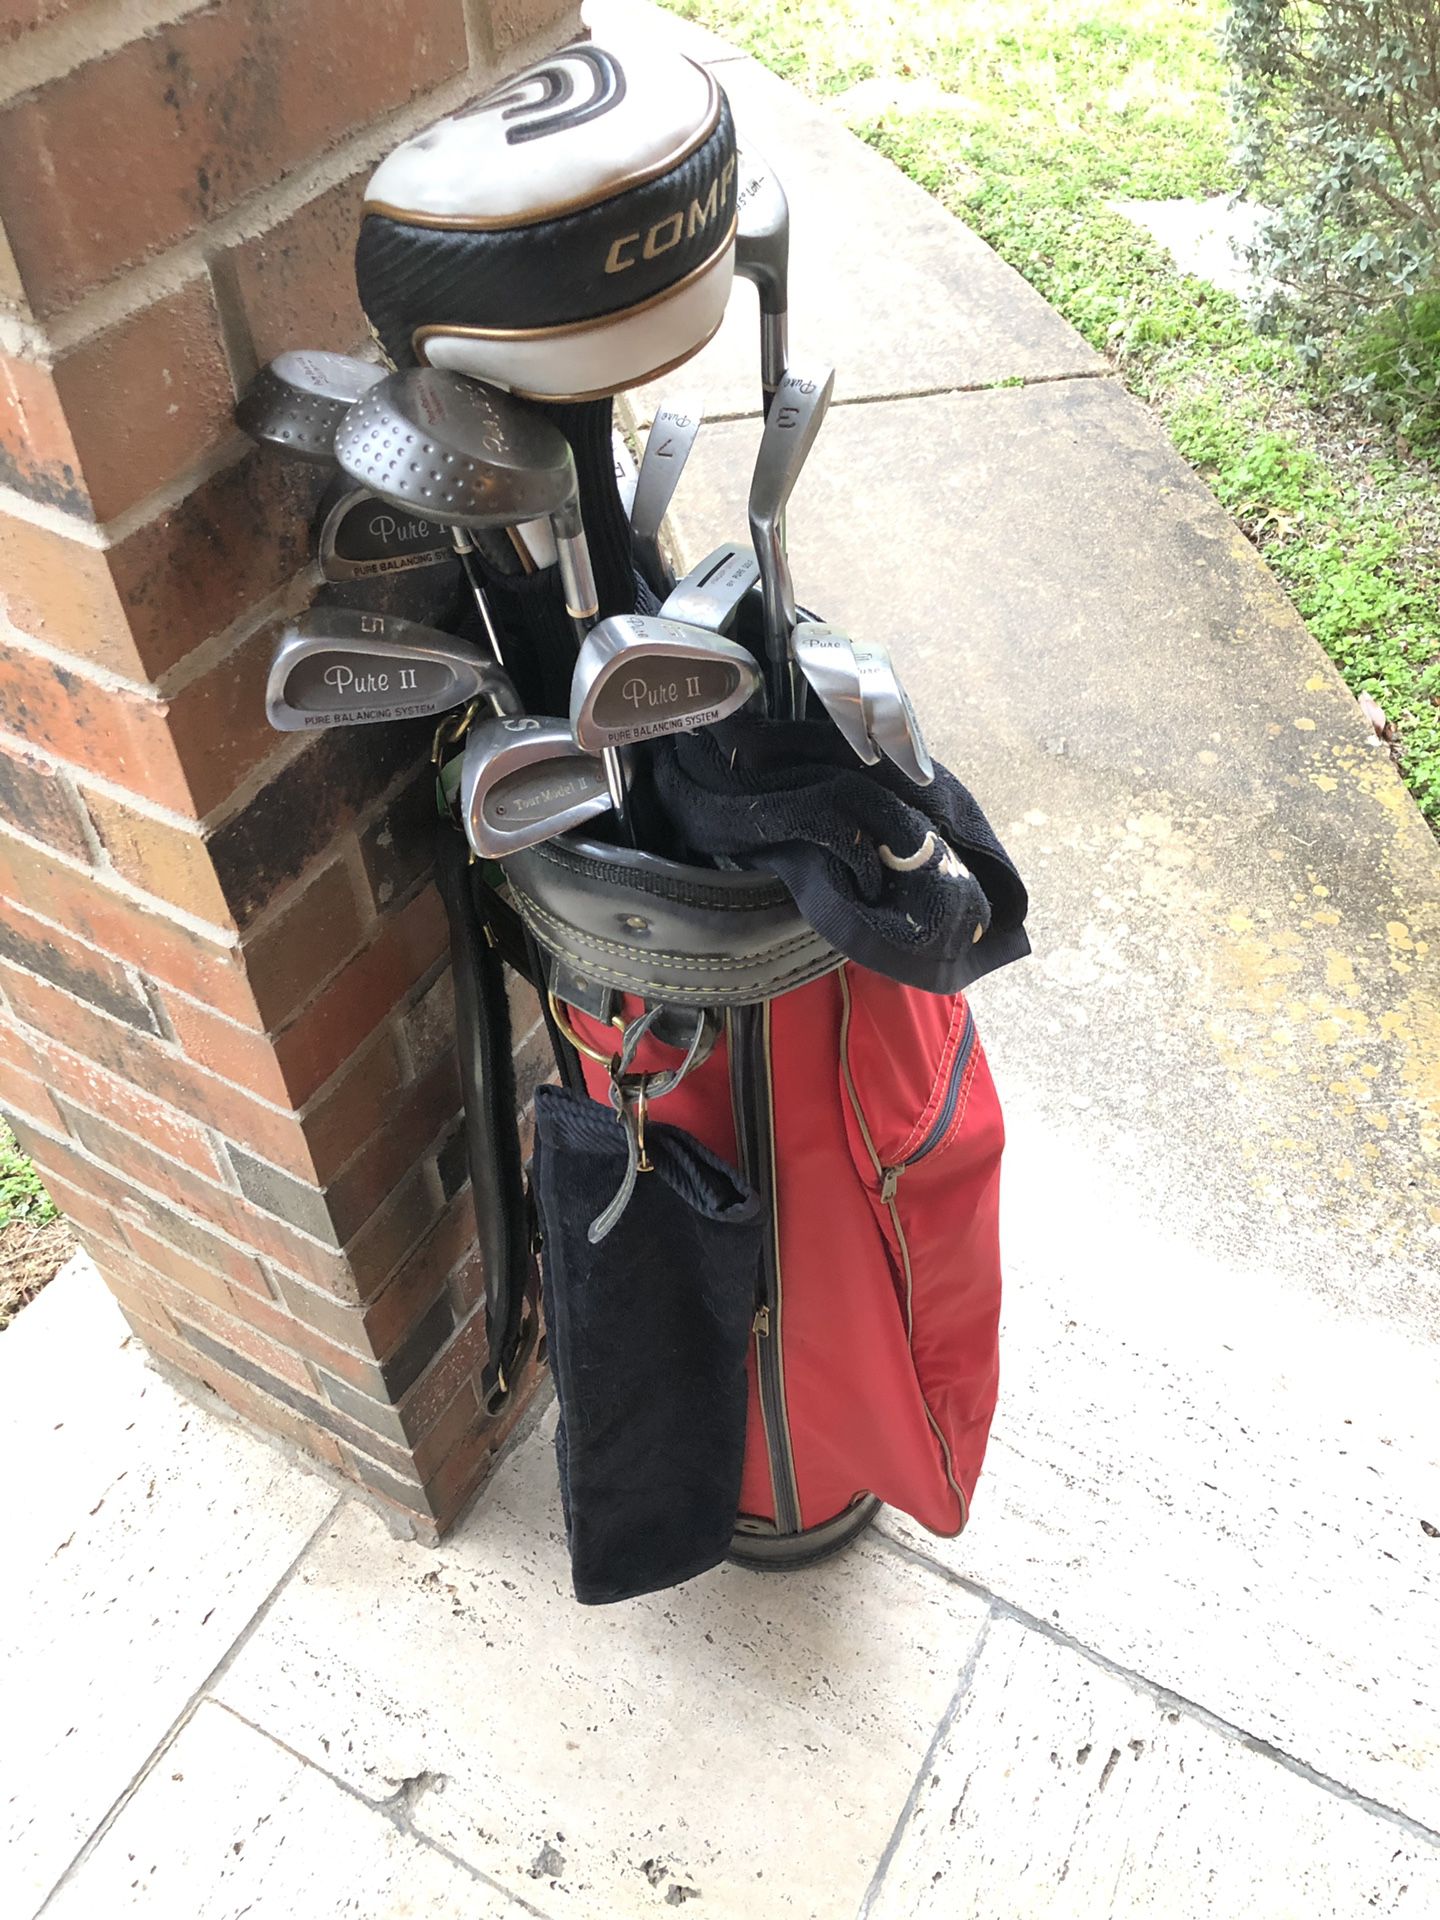 Full set of golf clubs